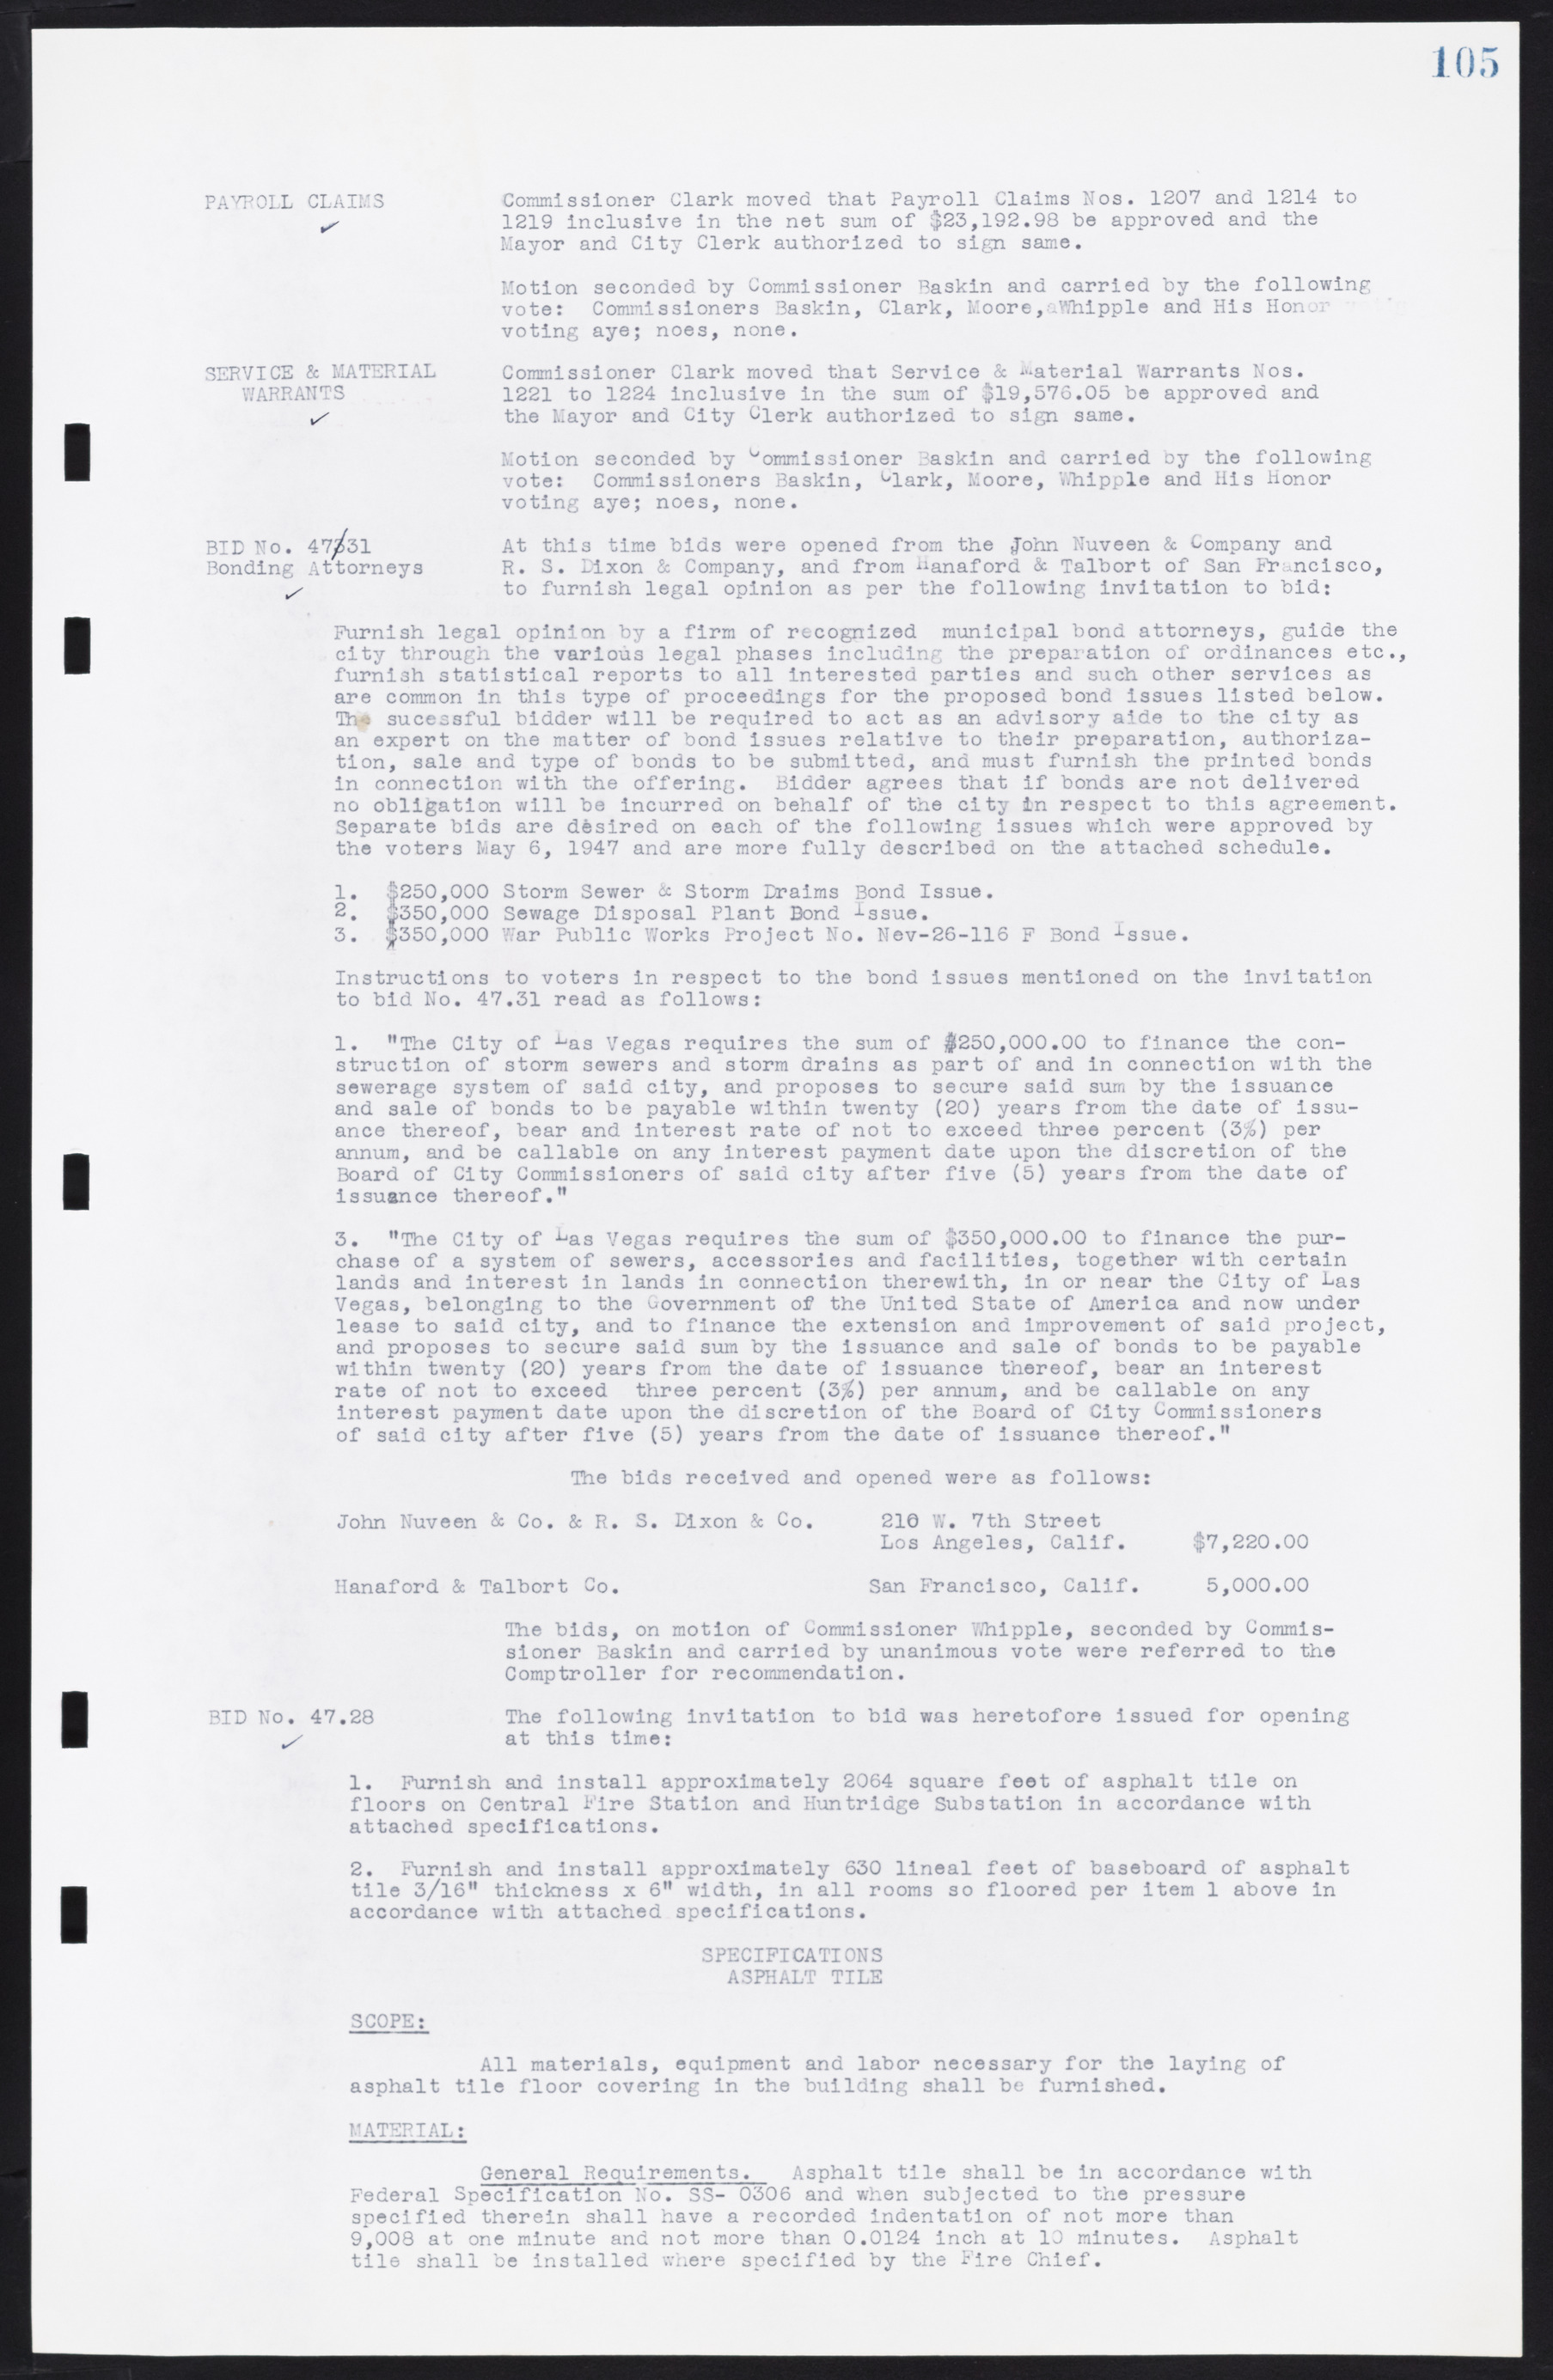 Las Vegas City Commission Minutes, January 7, 1947 to October 26, 1949, lvc000006-123